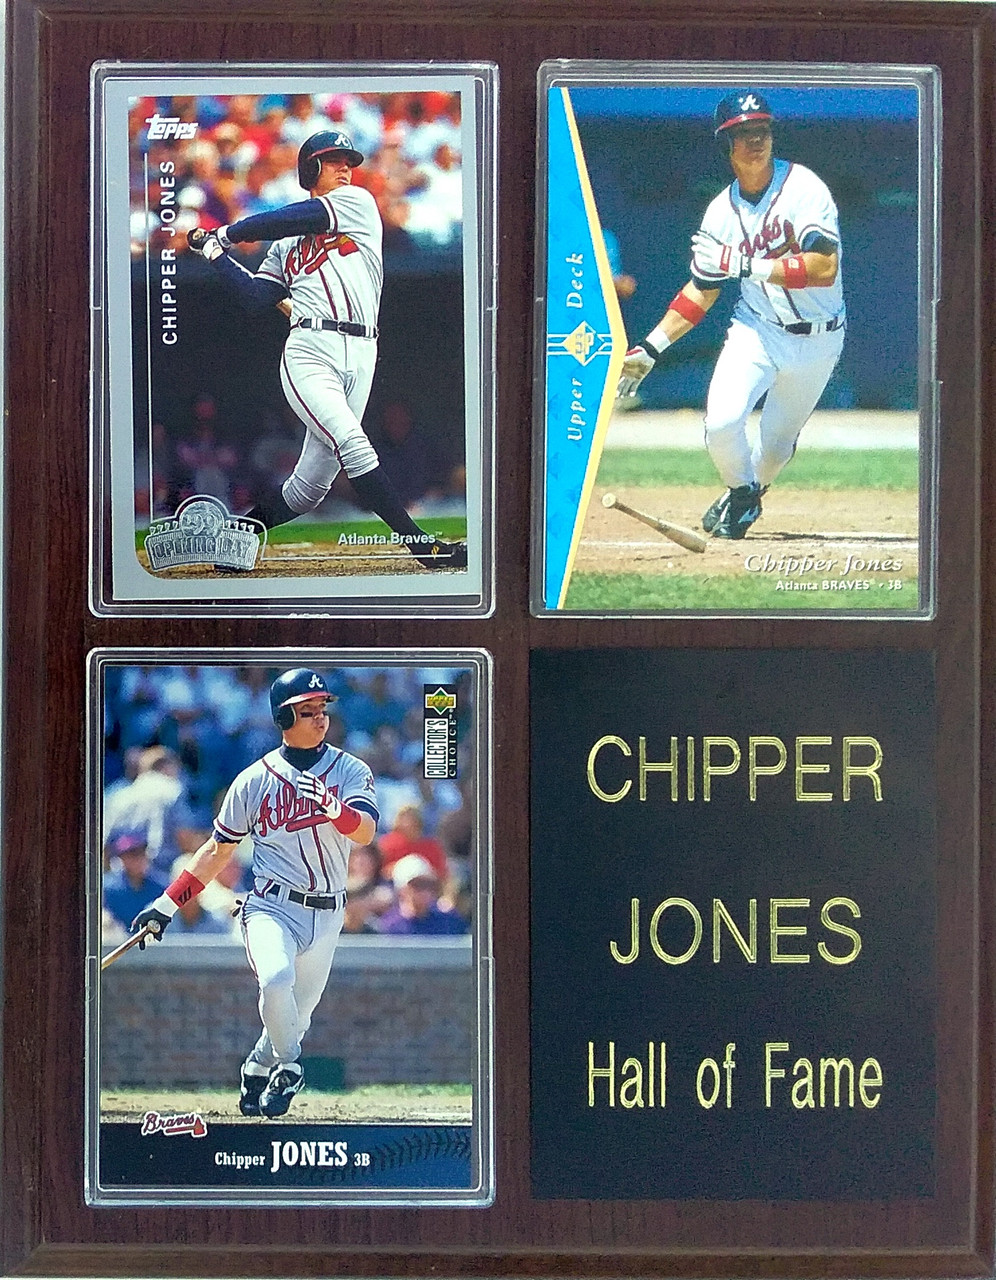 Atlanta Braves - Chipper Jones' plaque at the Baseball Hall of